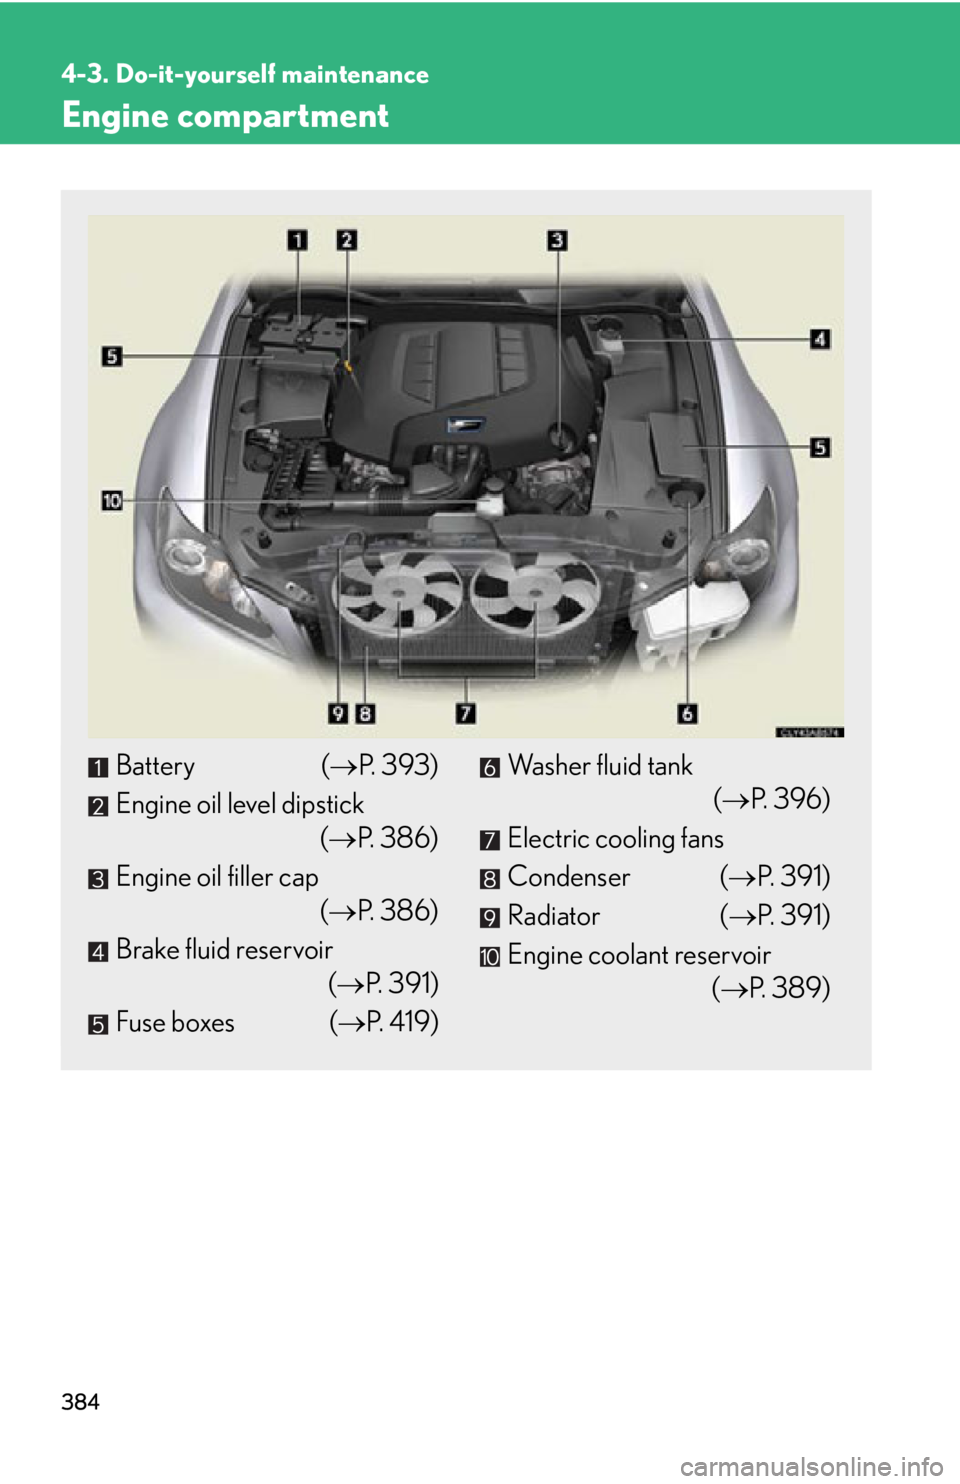 Lexus IS F 2011  Instrument Cluster / LEXUS 2011 IS F OWNERS MANUAL (OM53893U) 384
4-3. Do-it-yourself maintenance
Engine compartment
Battery (P. 393)
Engine oil level dipstick (P. 386)
Engine oil filler cap (P. 386)
Brake fluid reservoir (P. 391)
Fuse boxes ( P. 